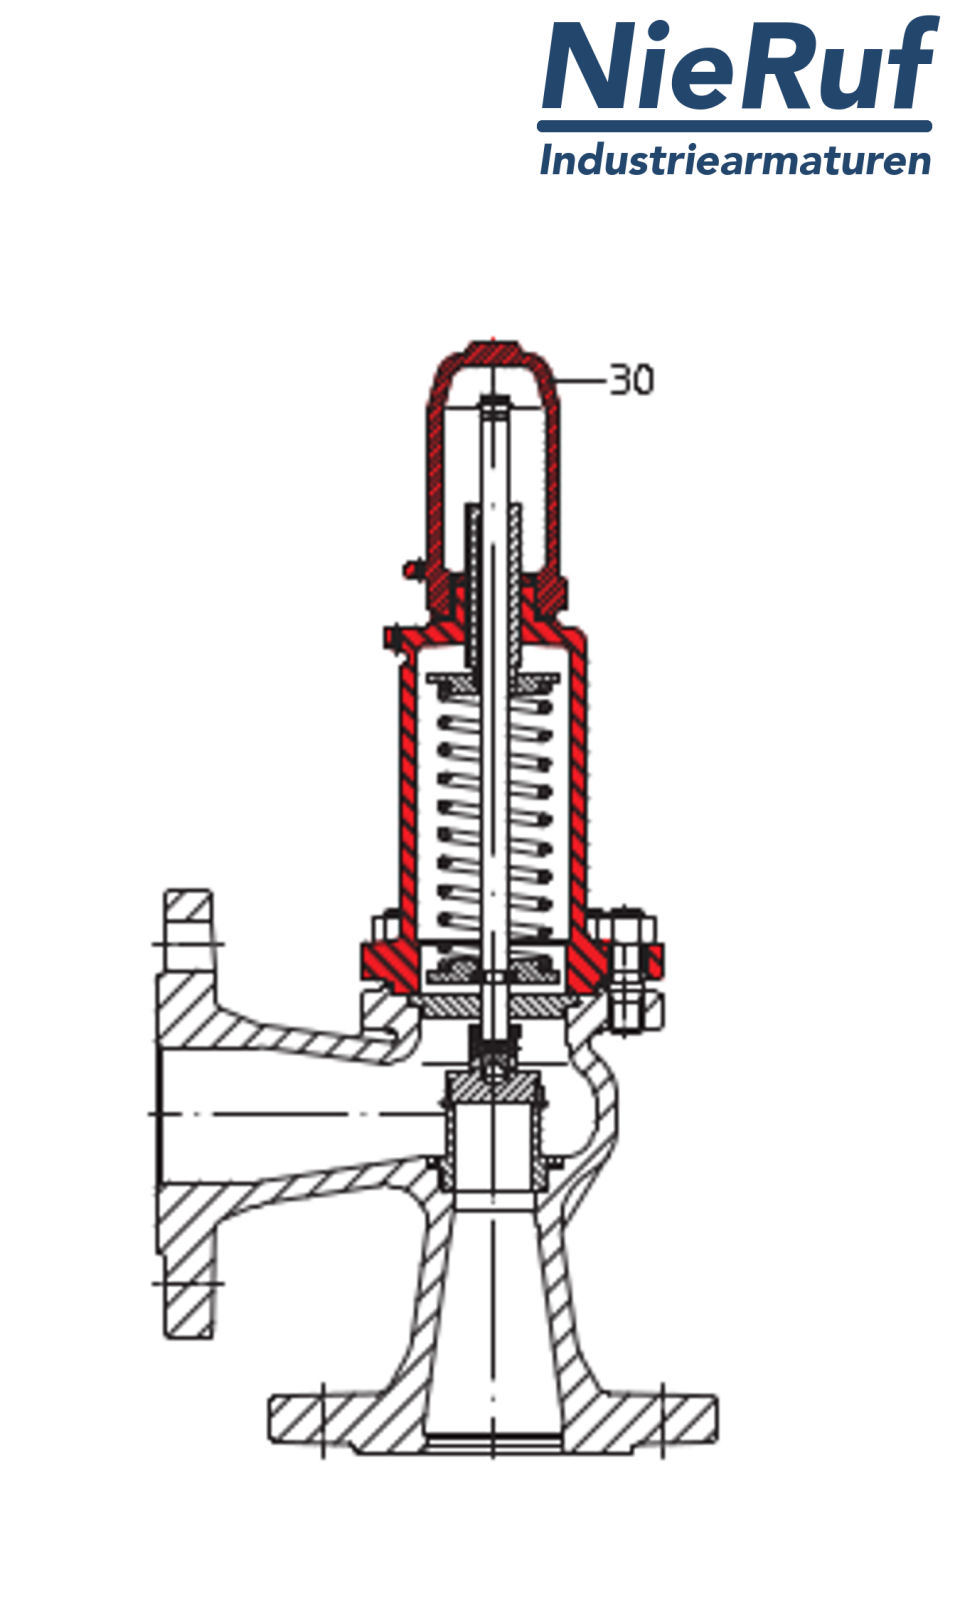 flange-safety valve DN50/DN50 SF0101, cast iron EN-JL1040 metal, without lever